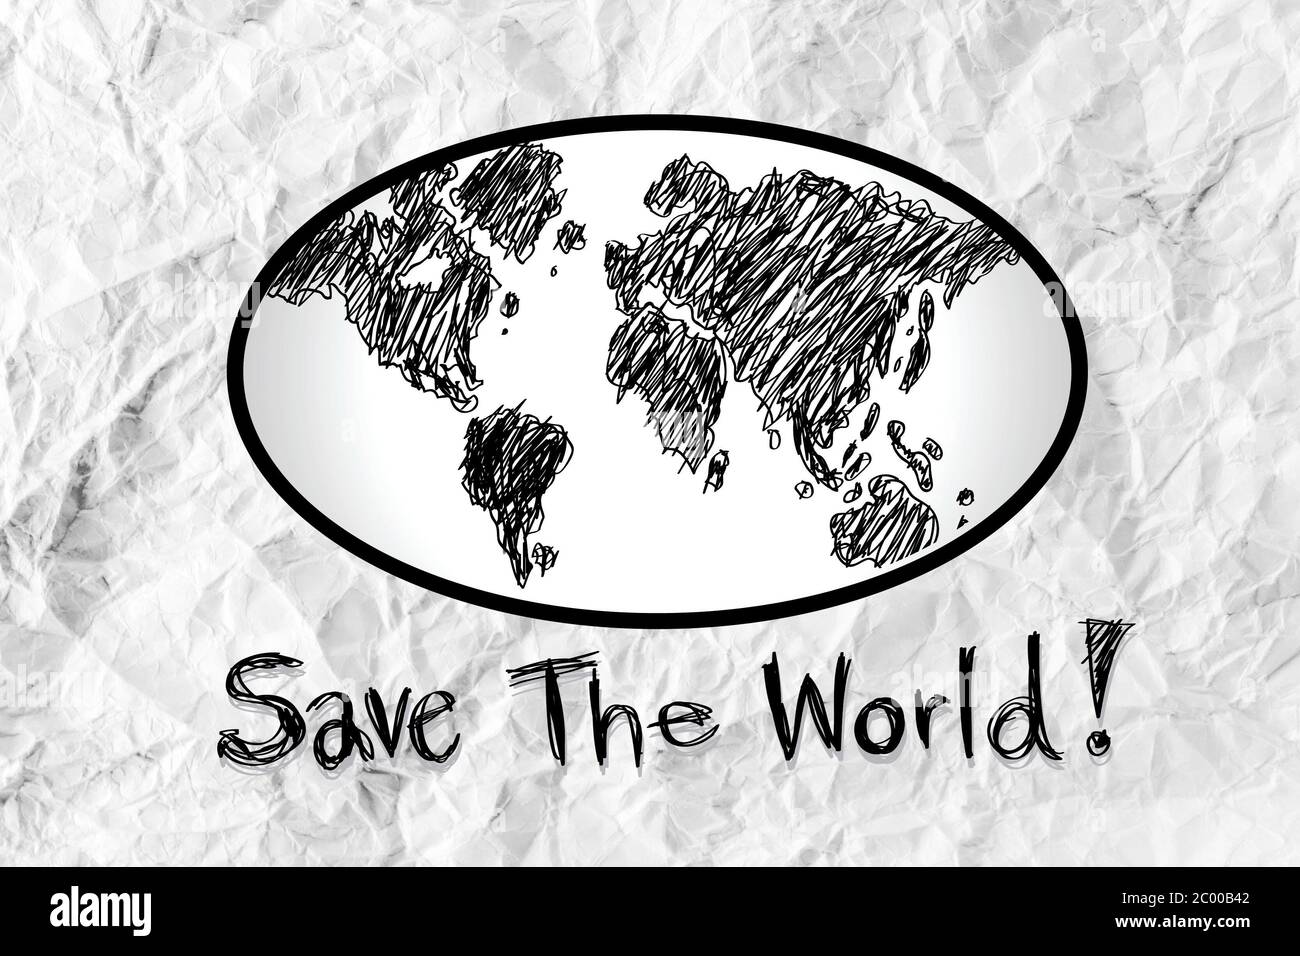 Globe earth icons themes idea design on crumpled paper Stock Photo